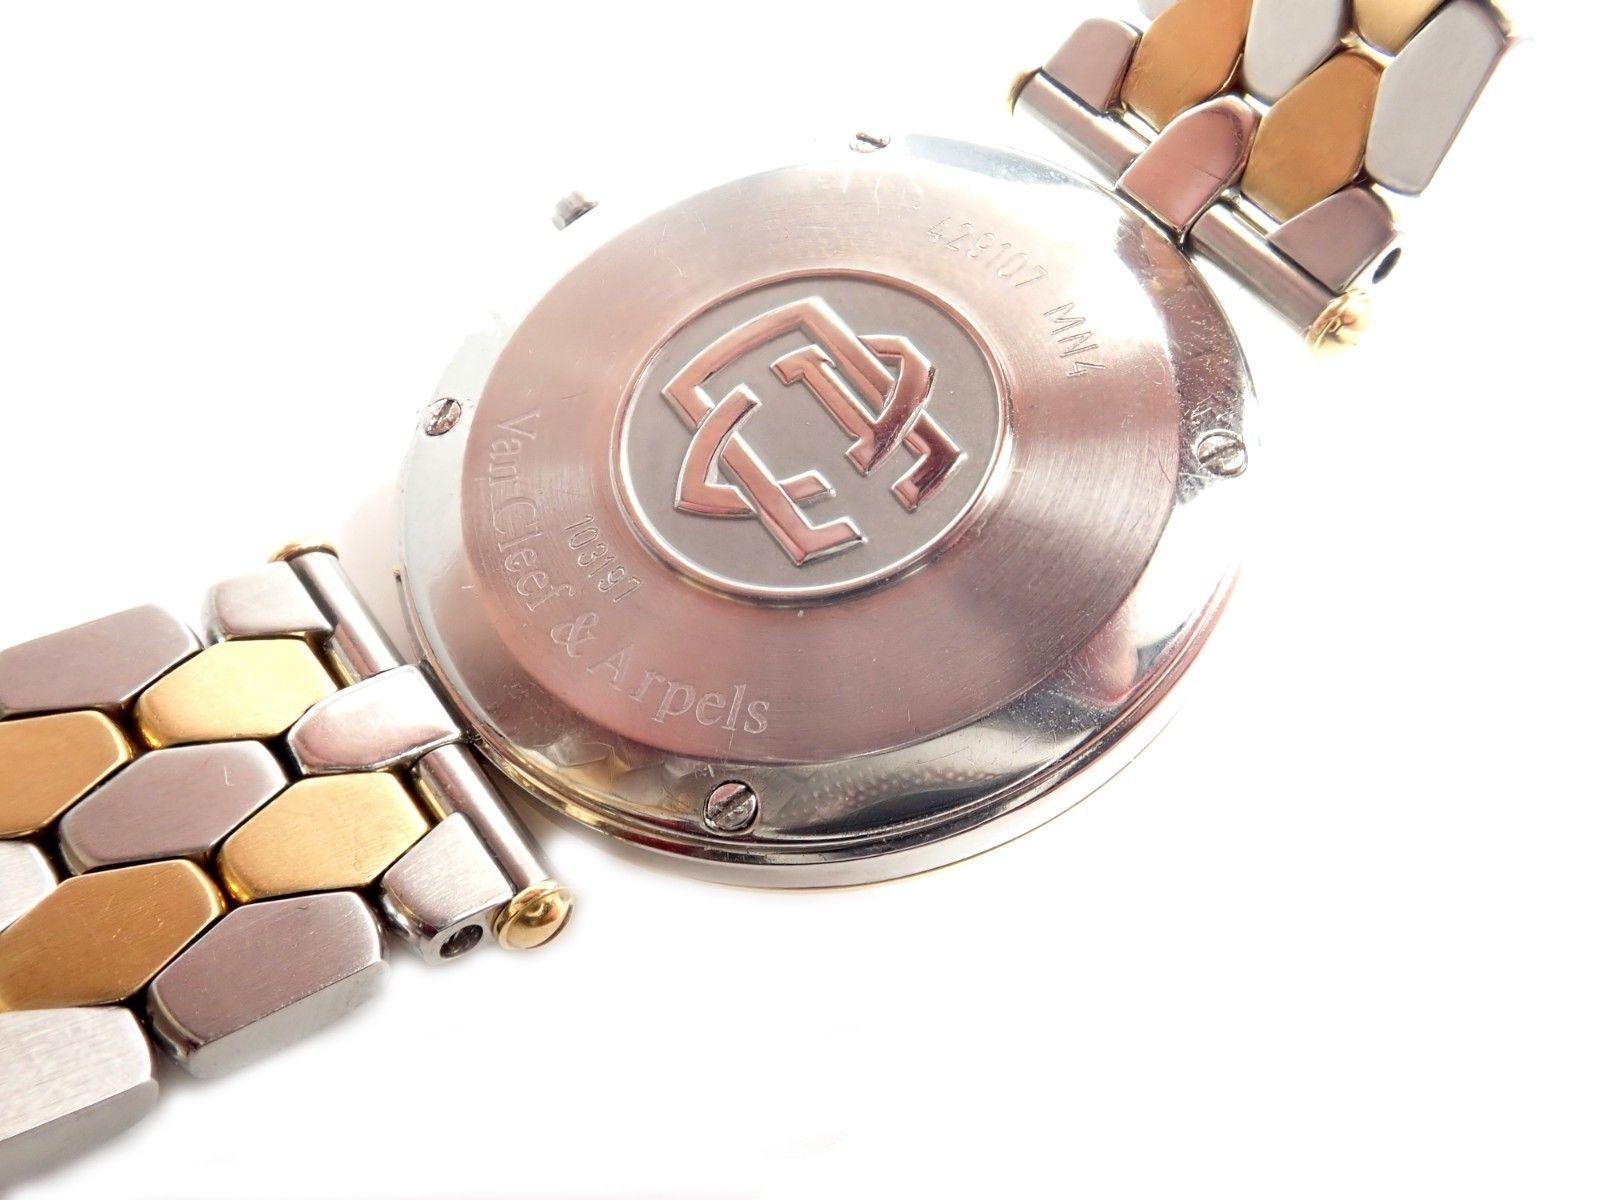 Van Cleef & Arpels Classique Quartz Gold and Stainless Steel Watch 2